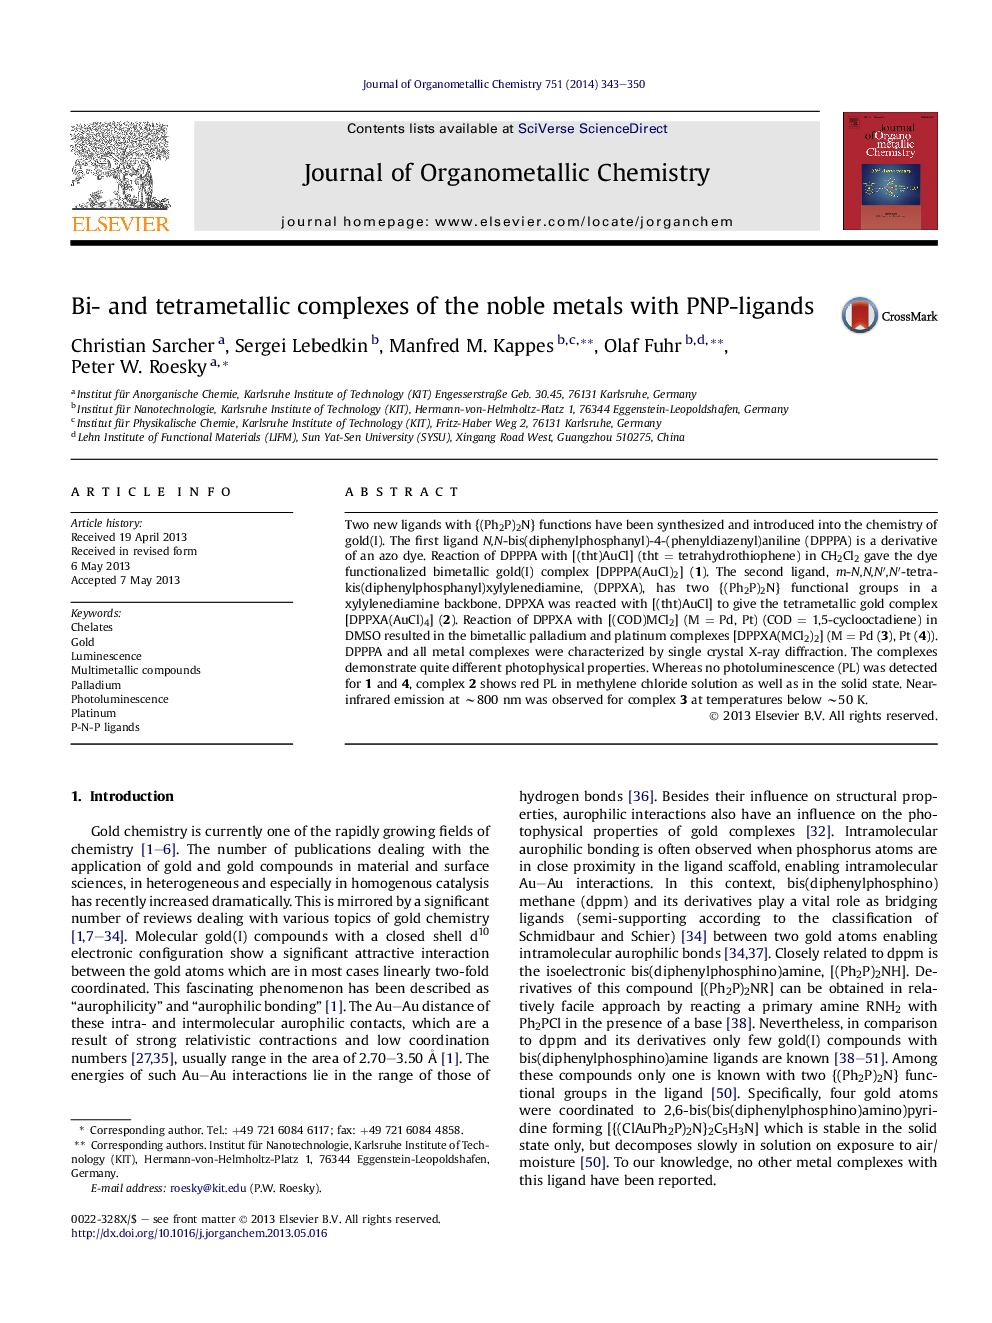 Bi- and tetrametallic complexes of the noble metals with PNP-ligands